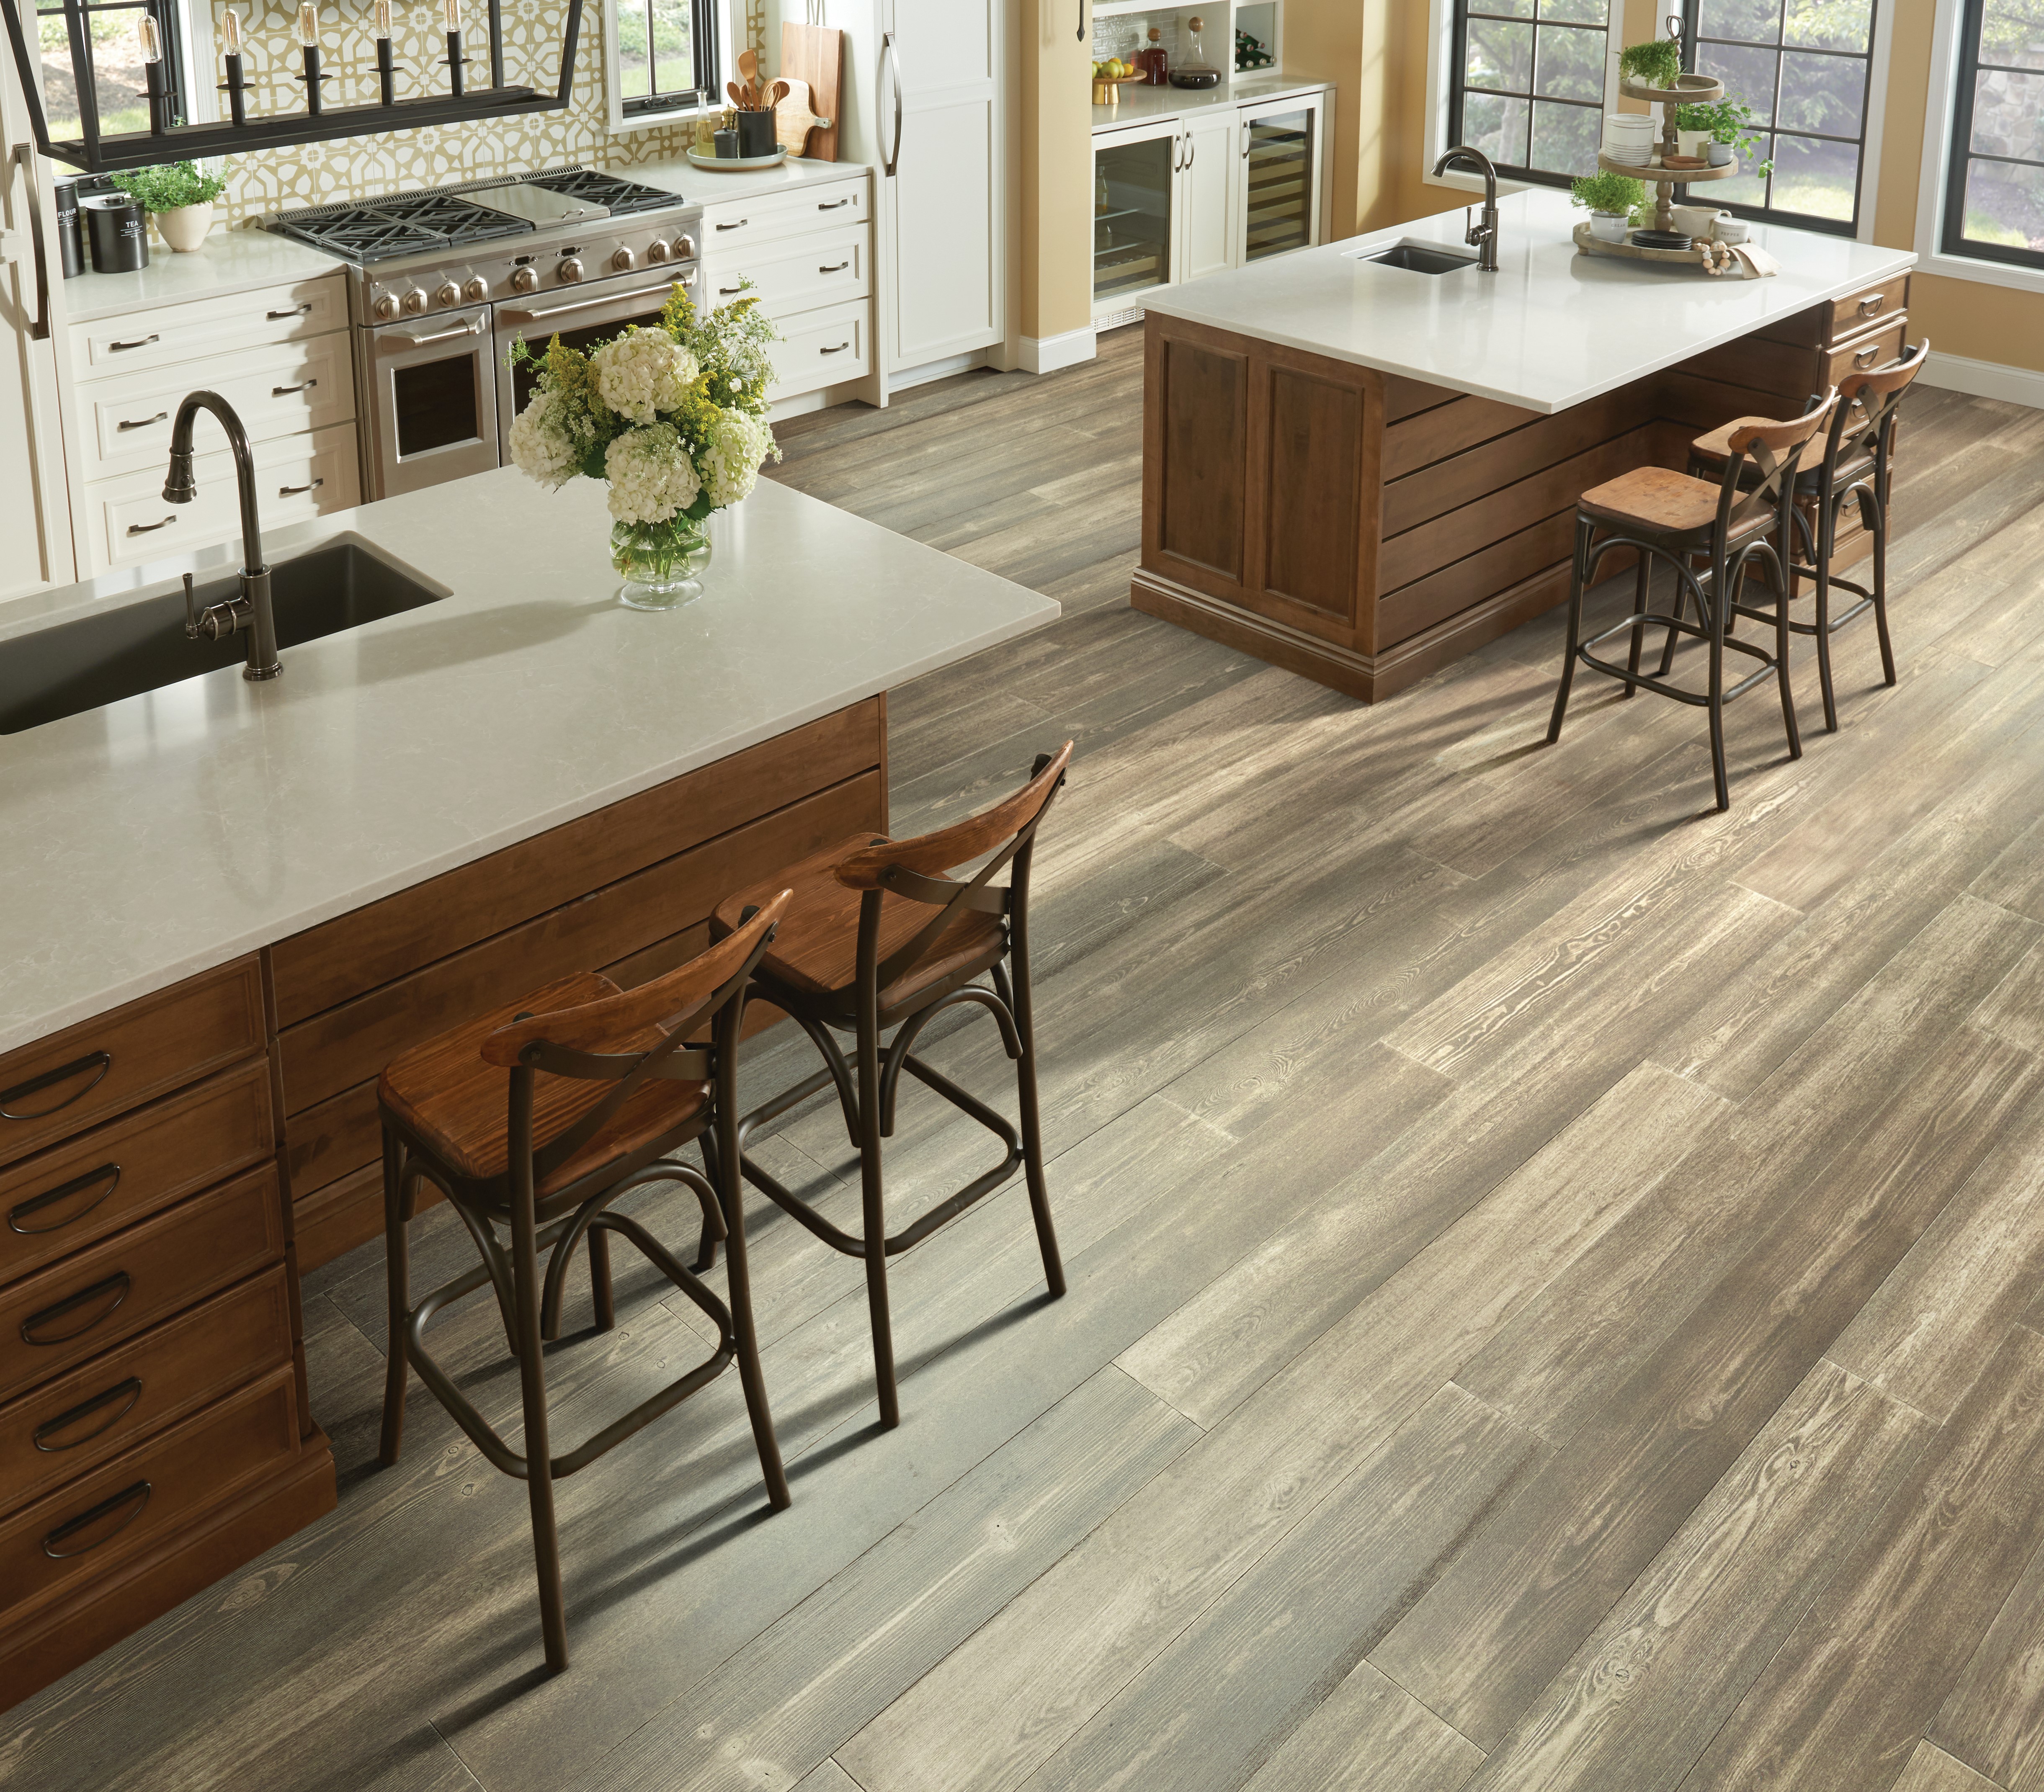 Kitchen scene featuring warm tones, two granite islands, stove, hardwood floors.